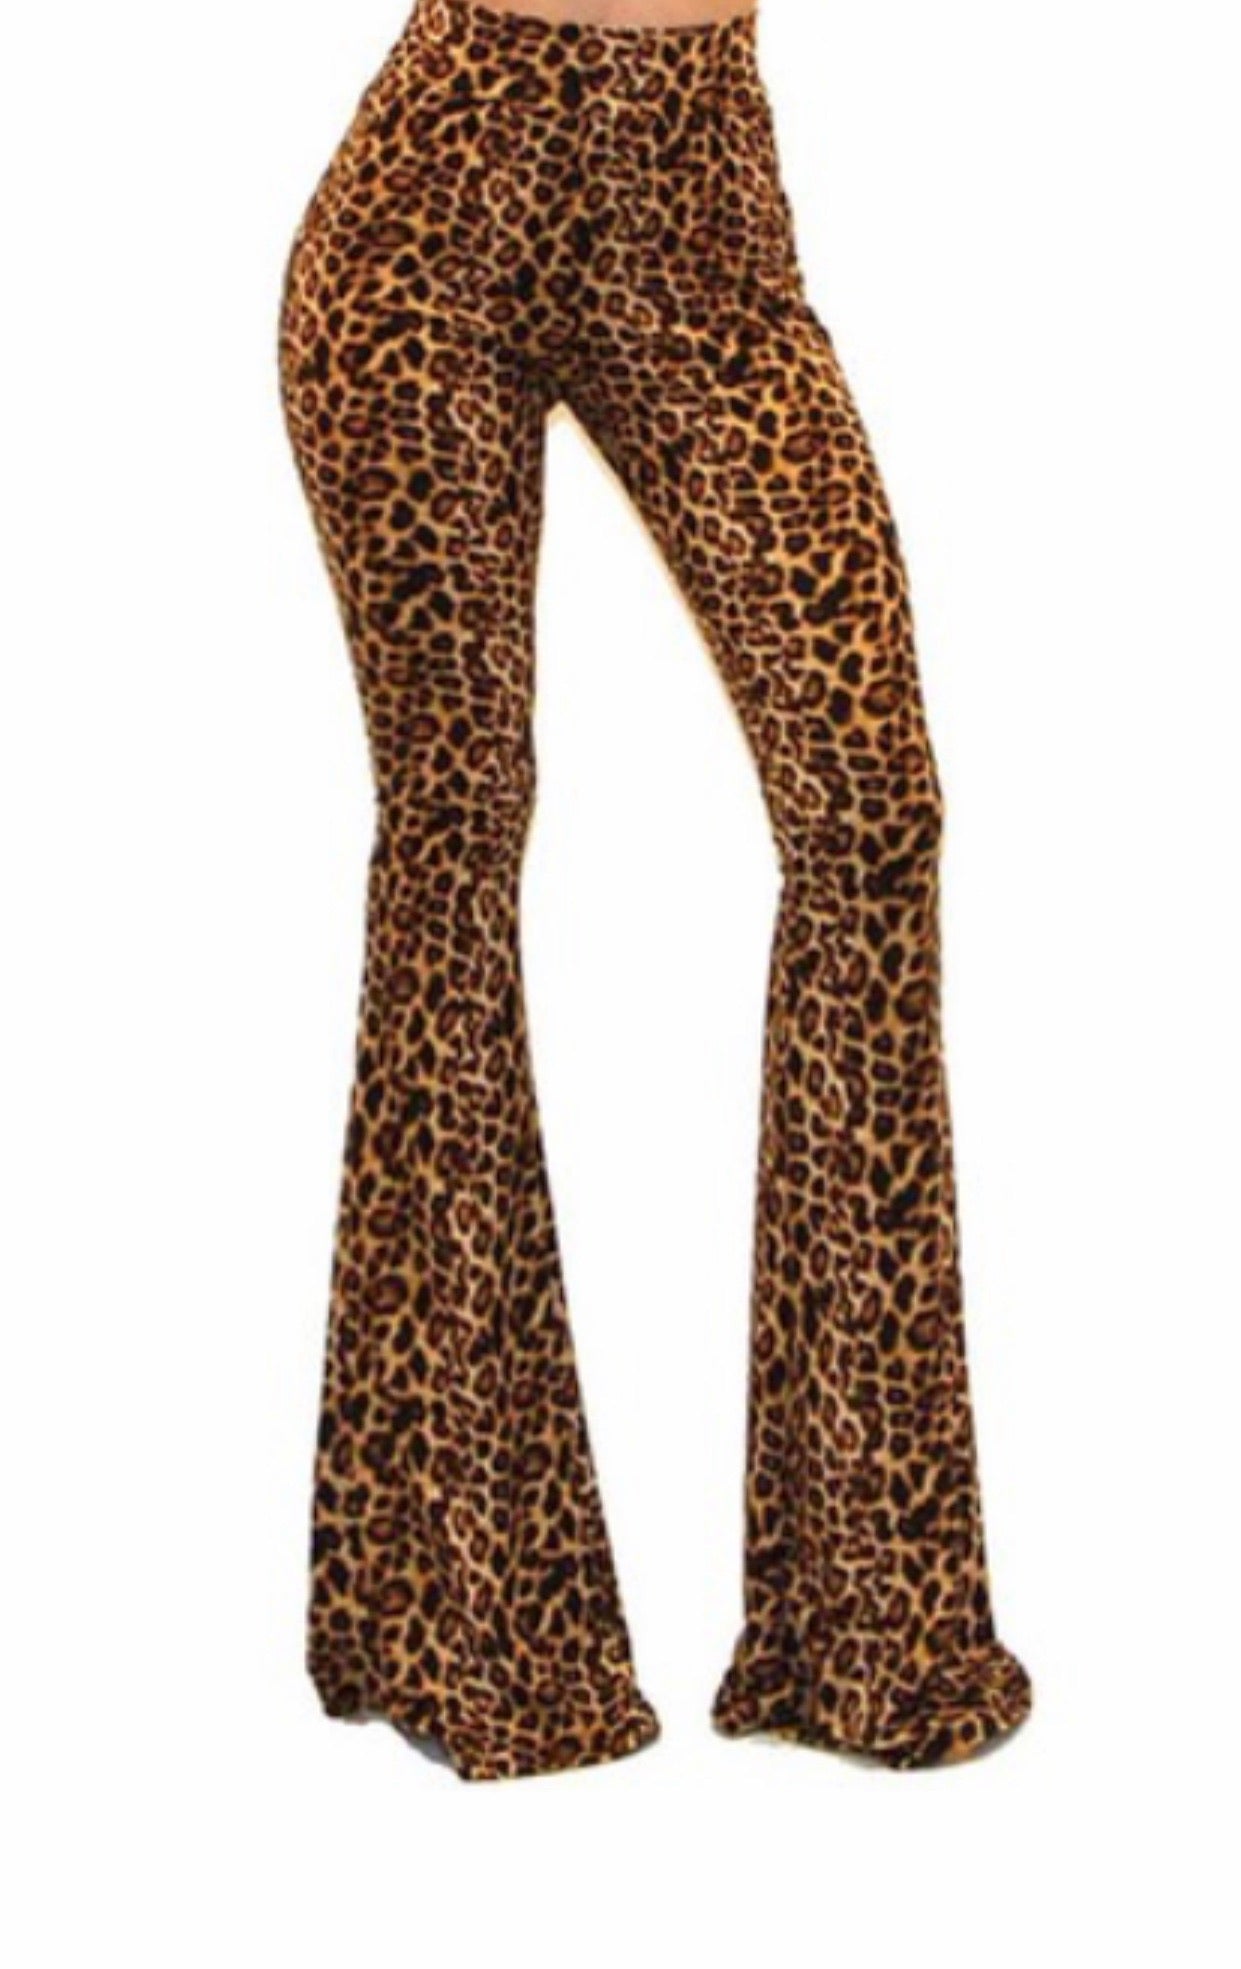 Leopard Bellbottom pants - ggfiona